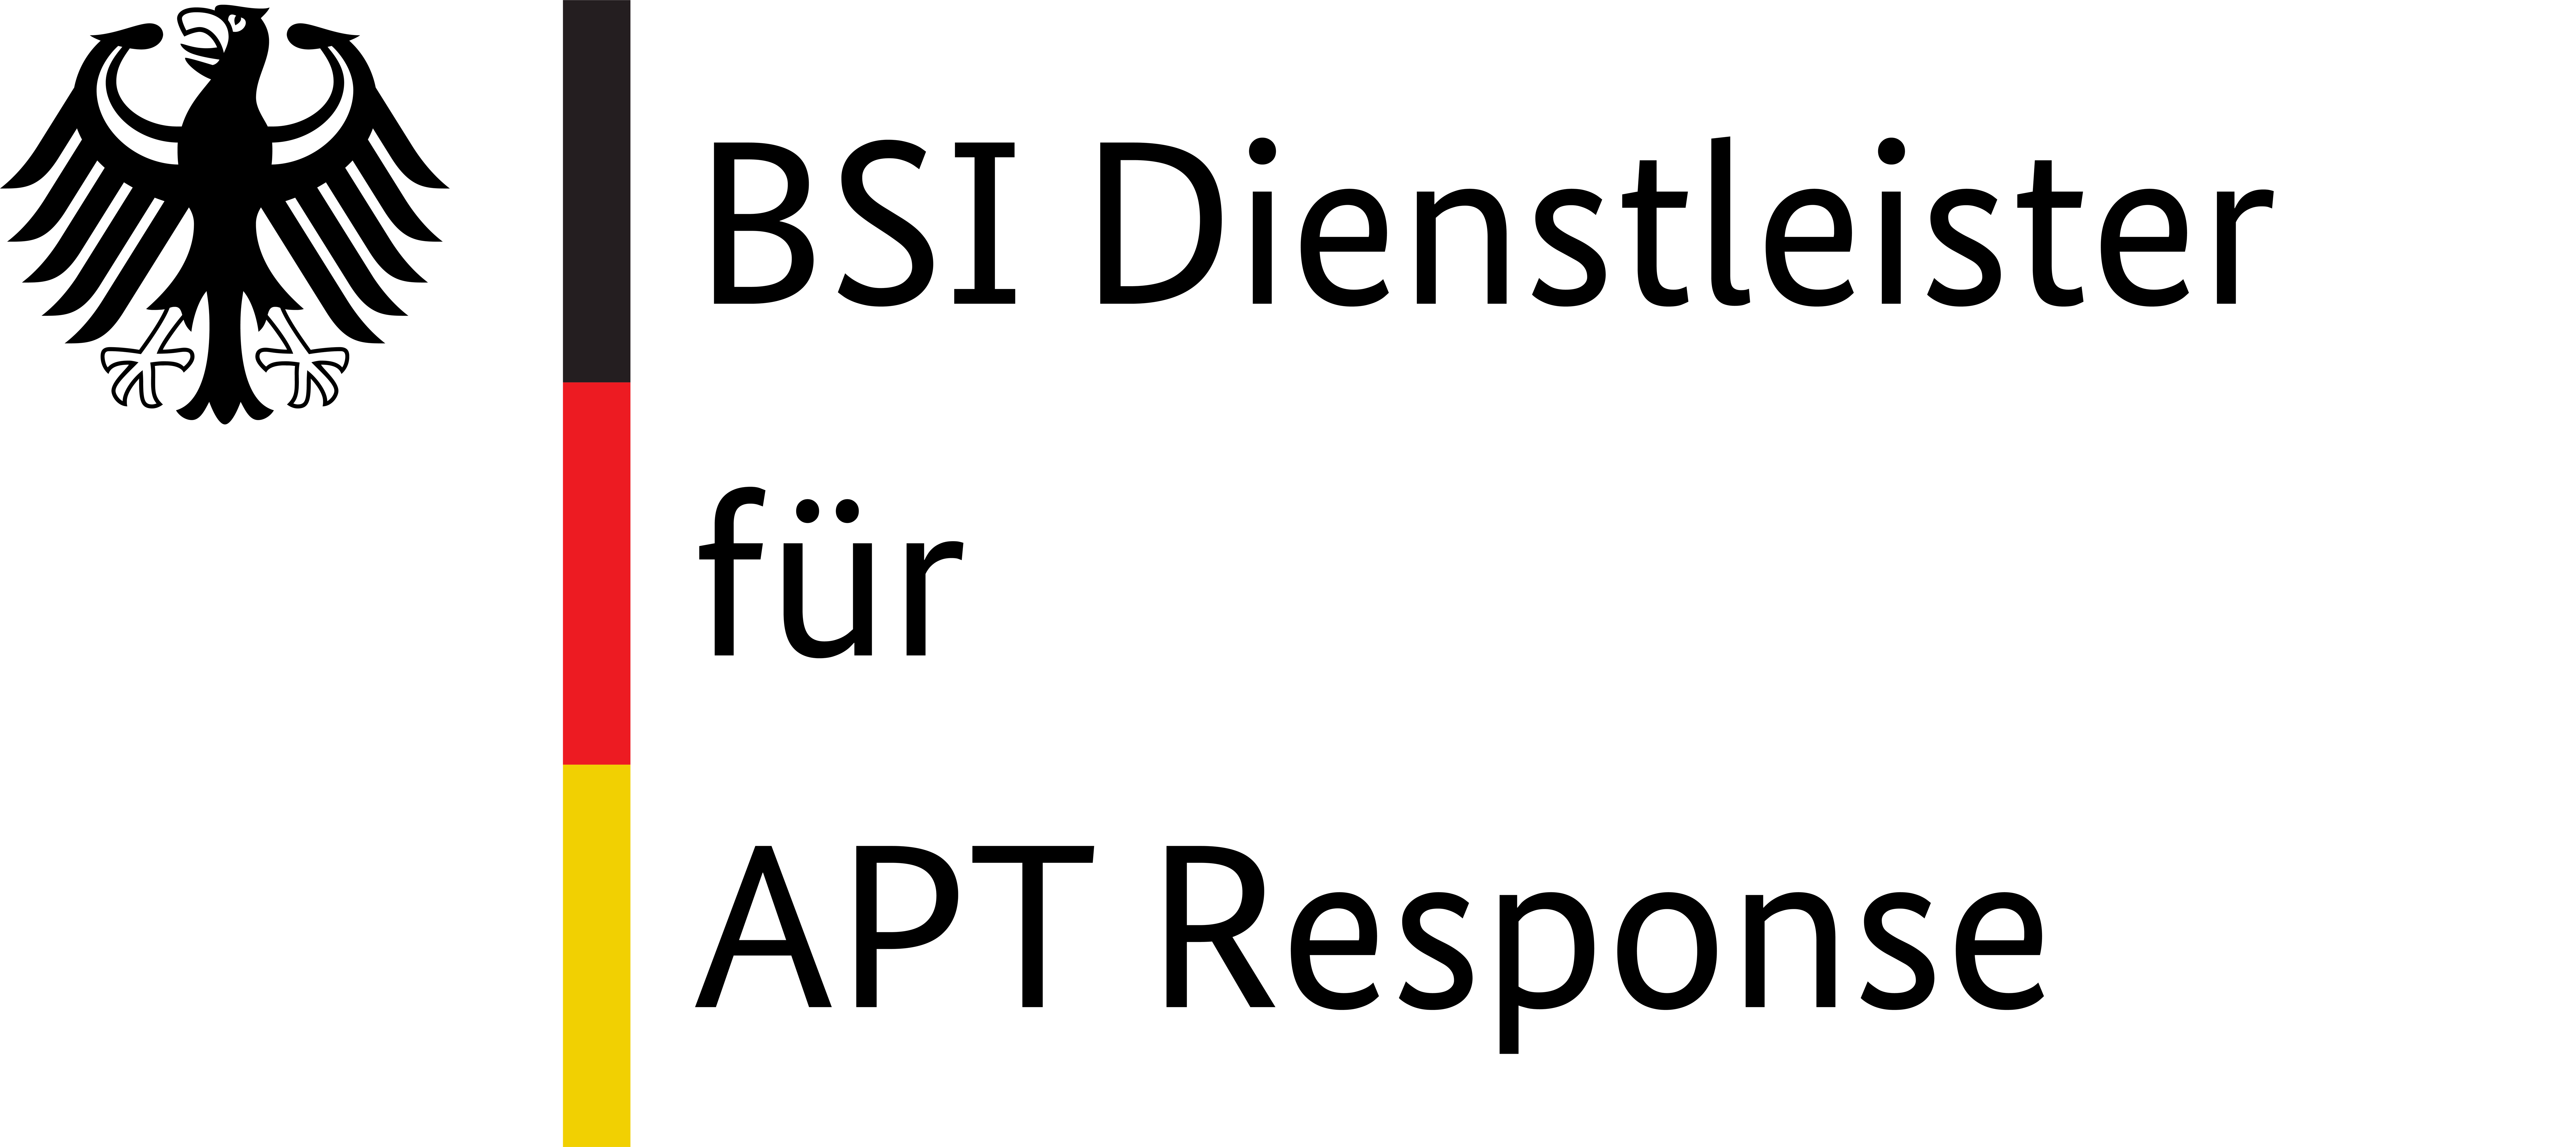 BSI APT Response